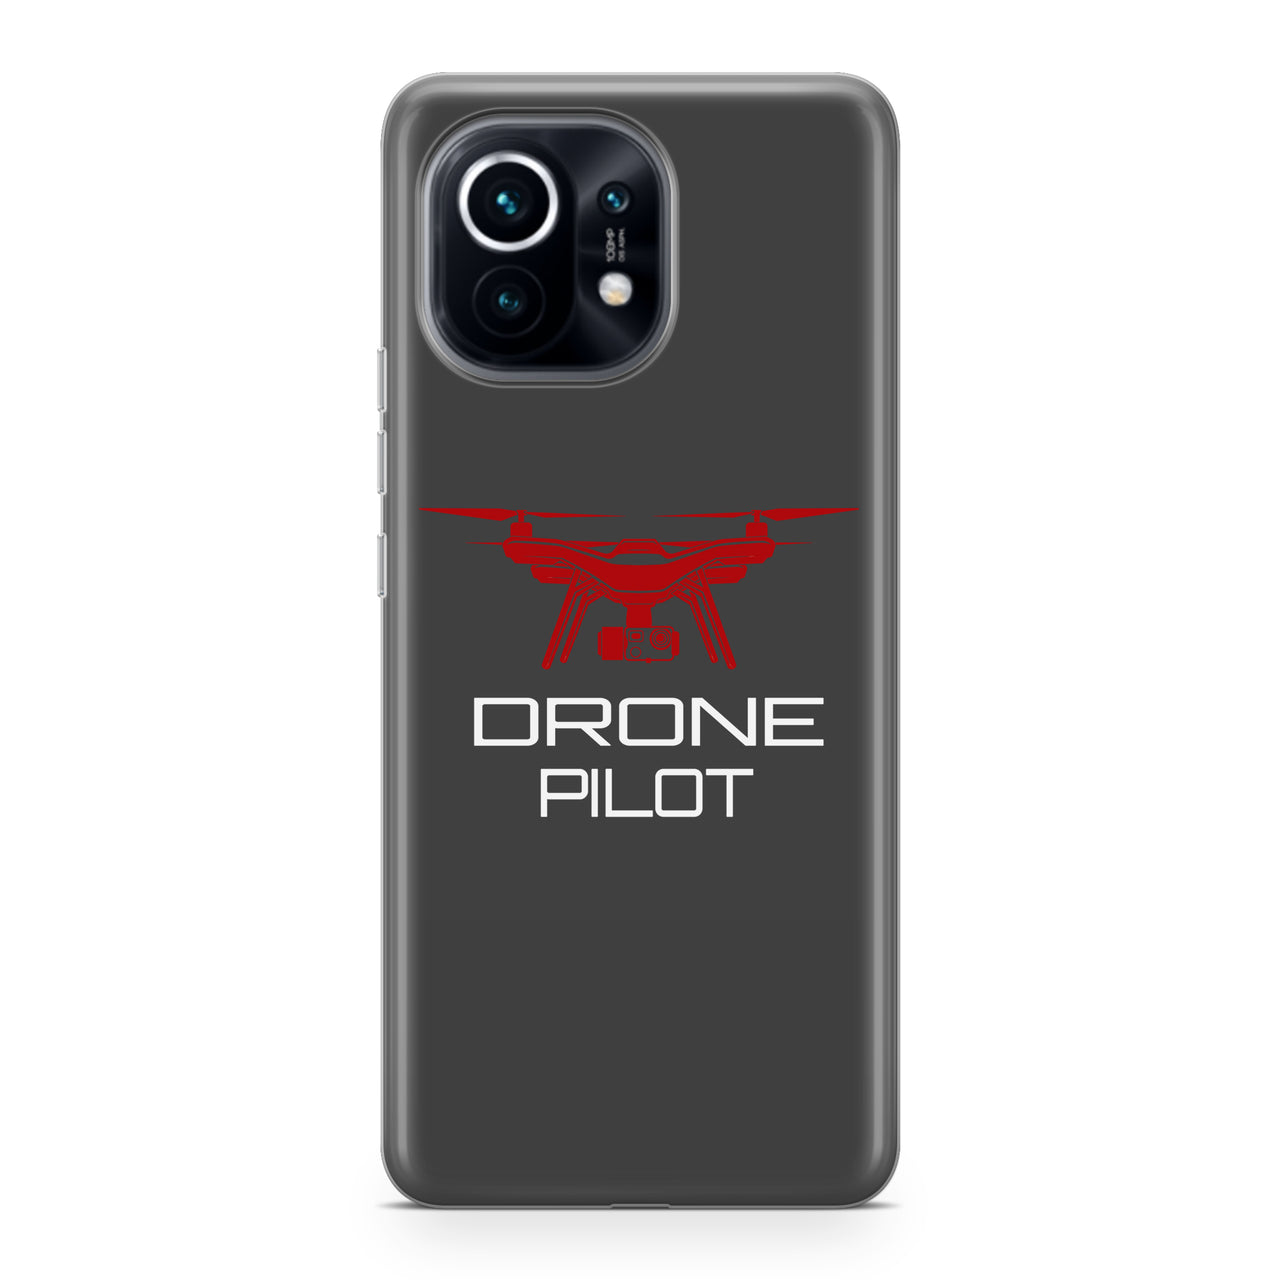 Drone Pilot Designed Xiaomi Cases